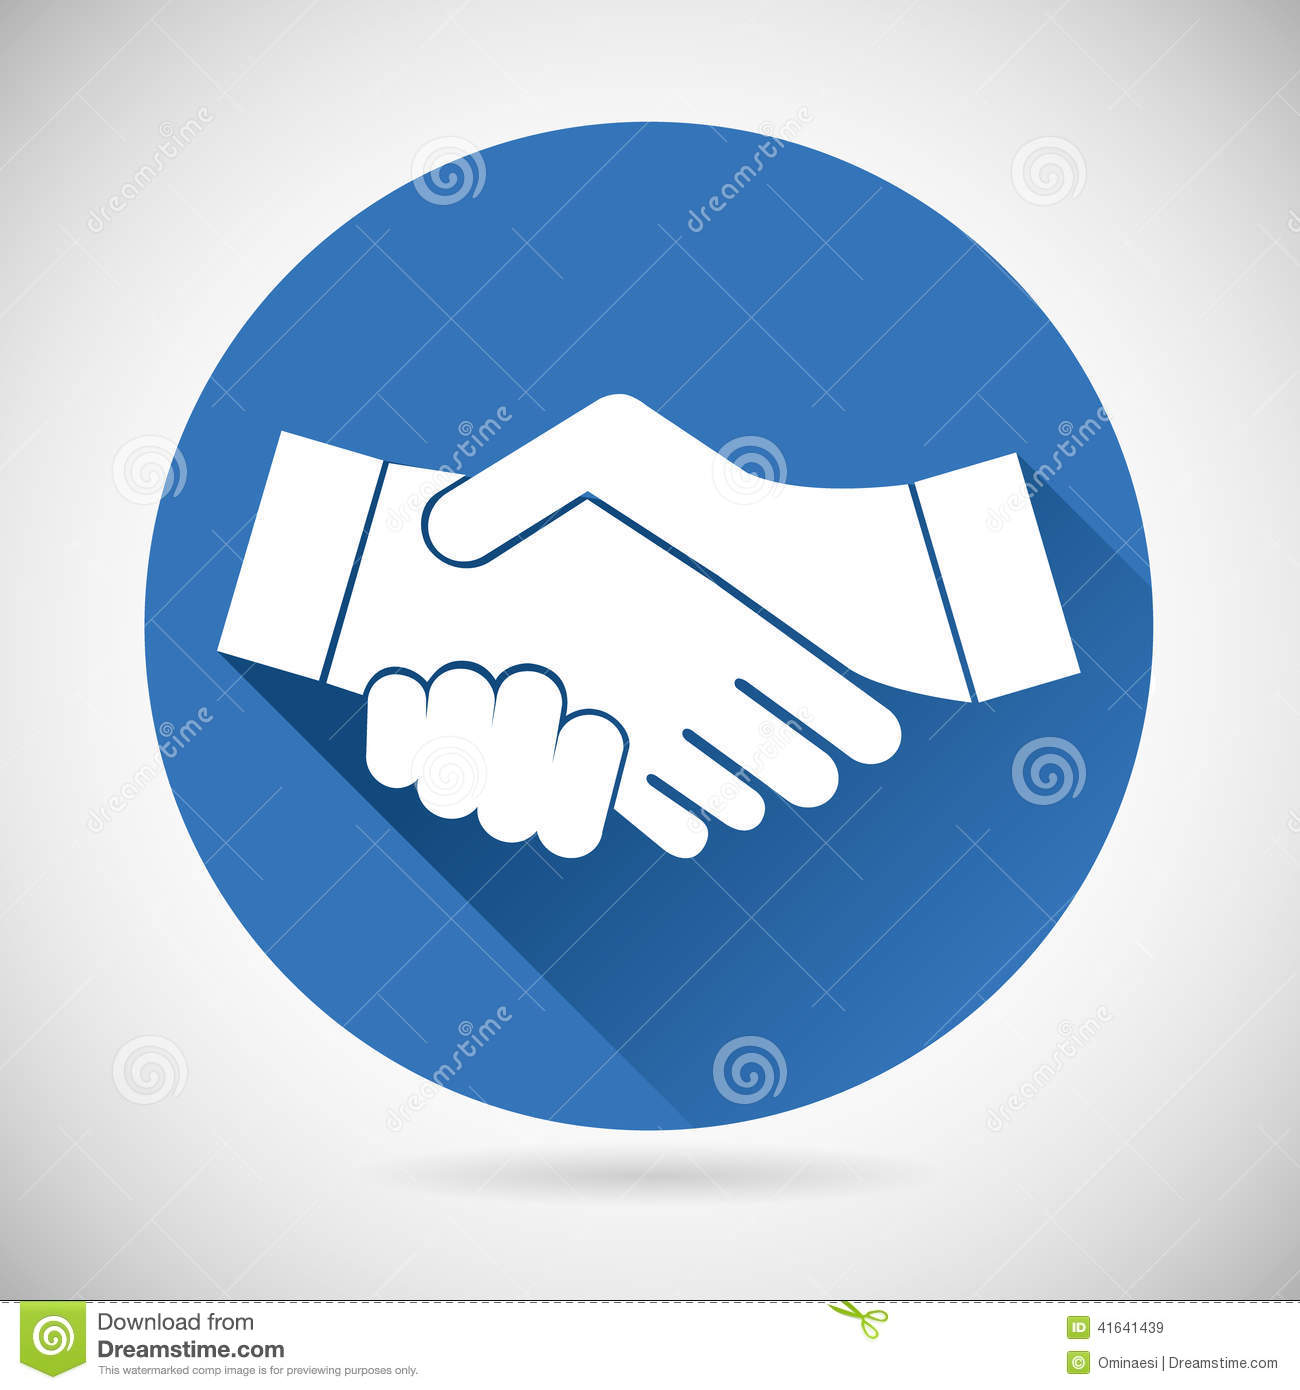 Partnership Handshake Symbol